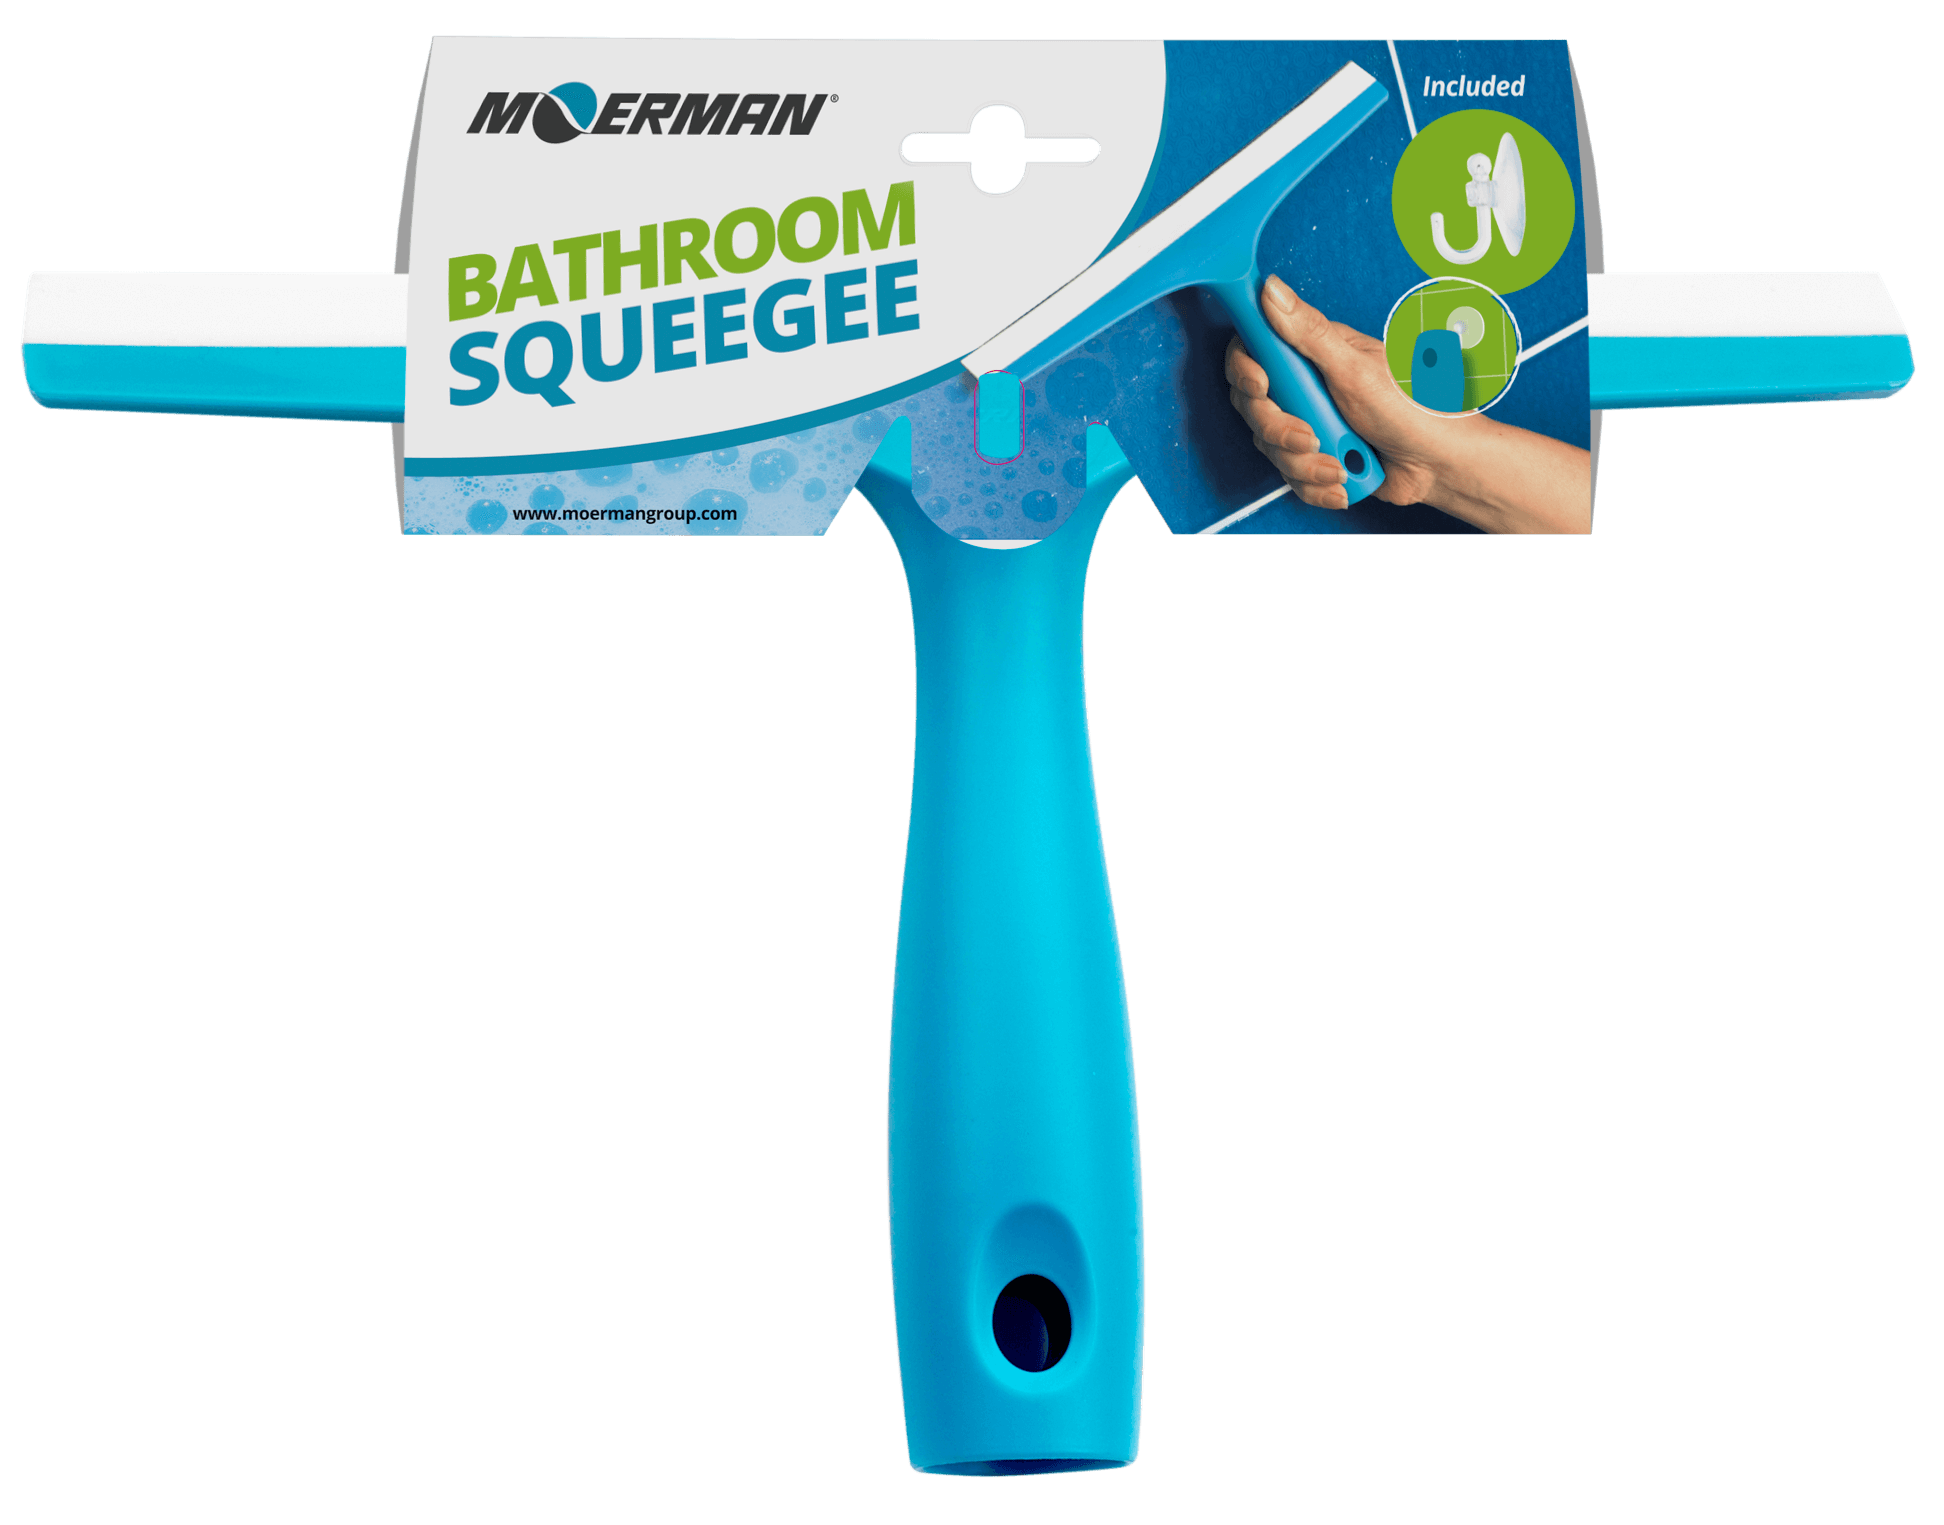 Bathroom squeegee - Aqua Wiping from Moerman